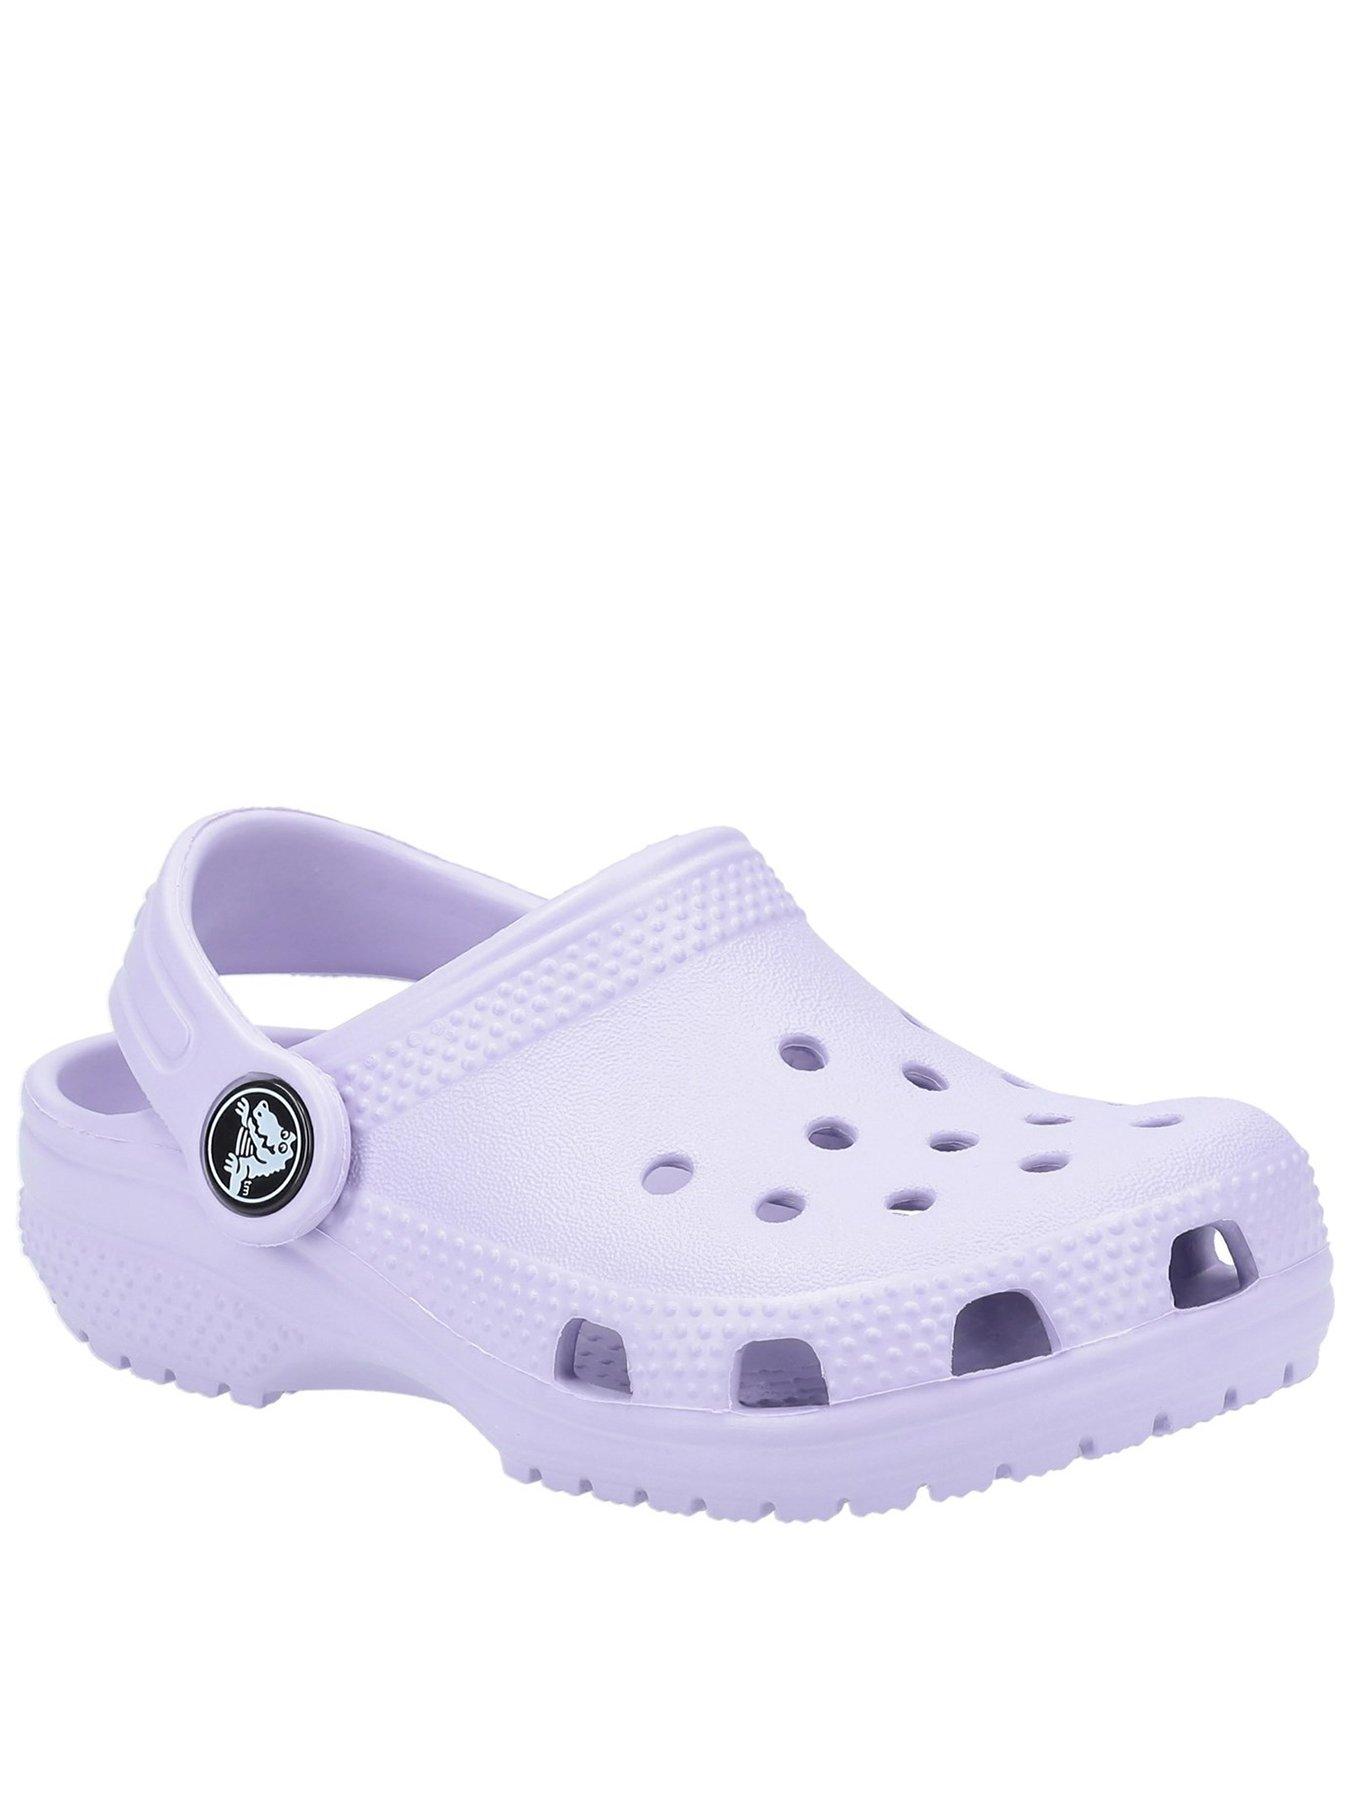 girls white crocs size 4